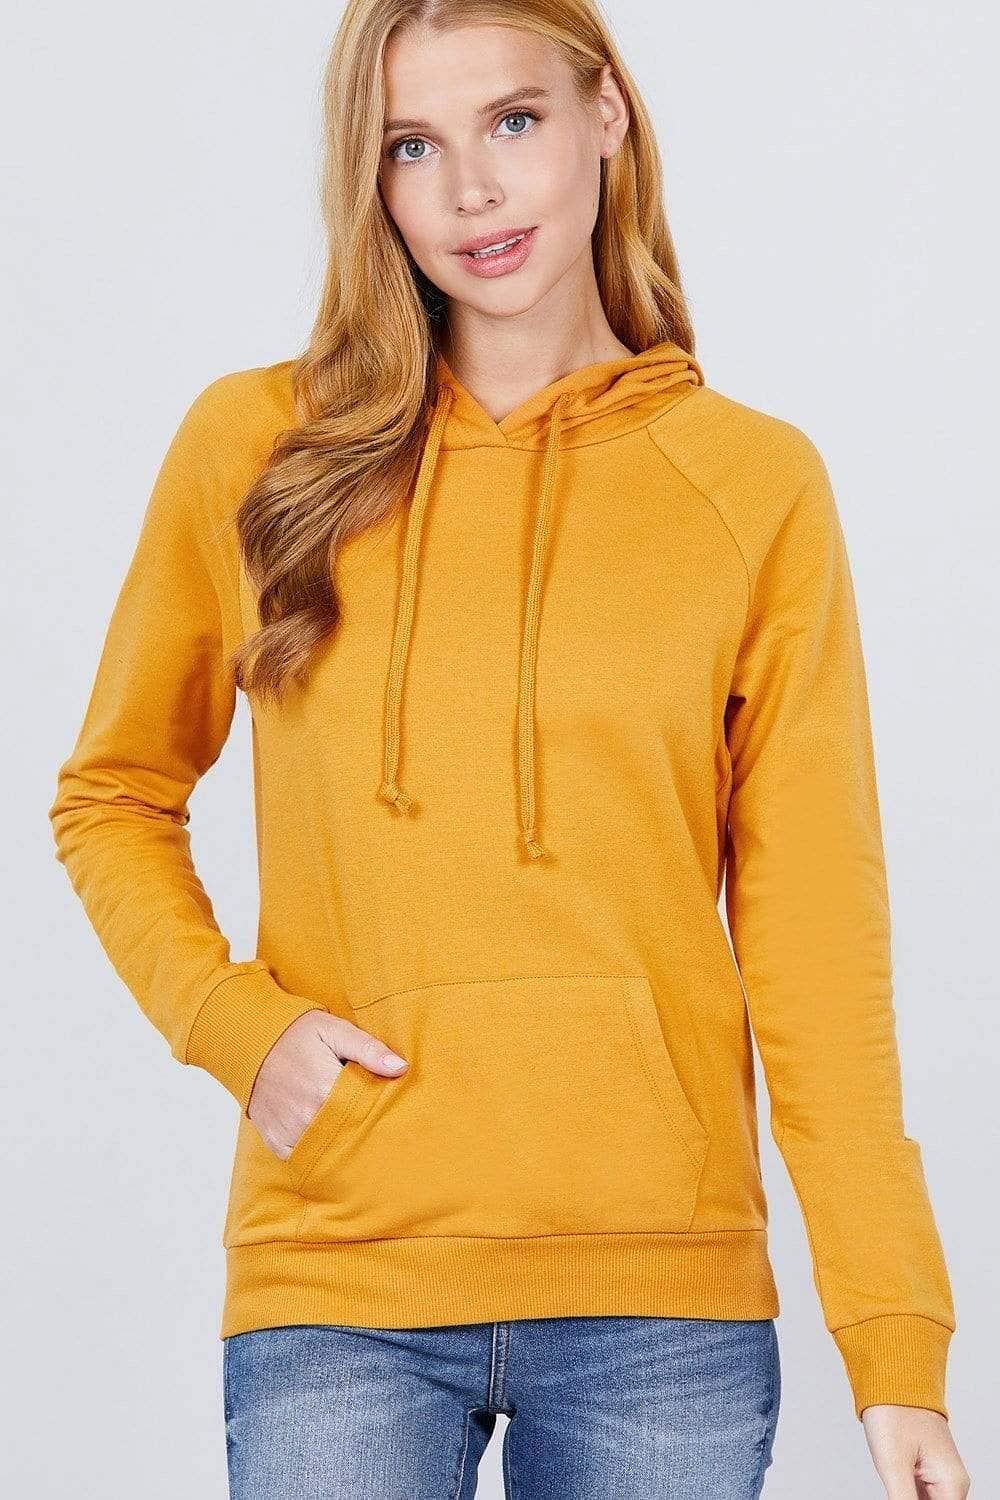 Mustard French Terry Long Sleeve Sweatshirt - Shopping Therapy, LLC Sweatshirt